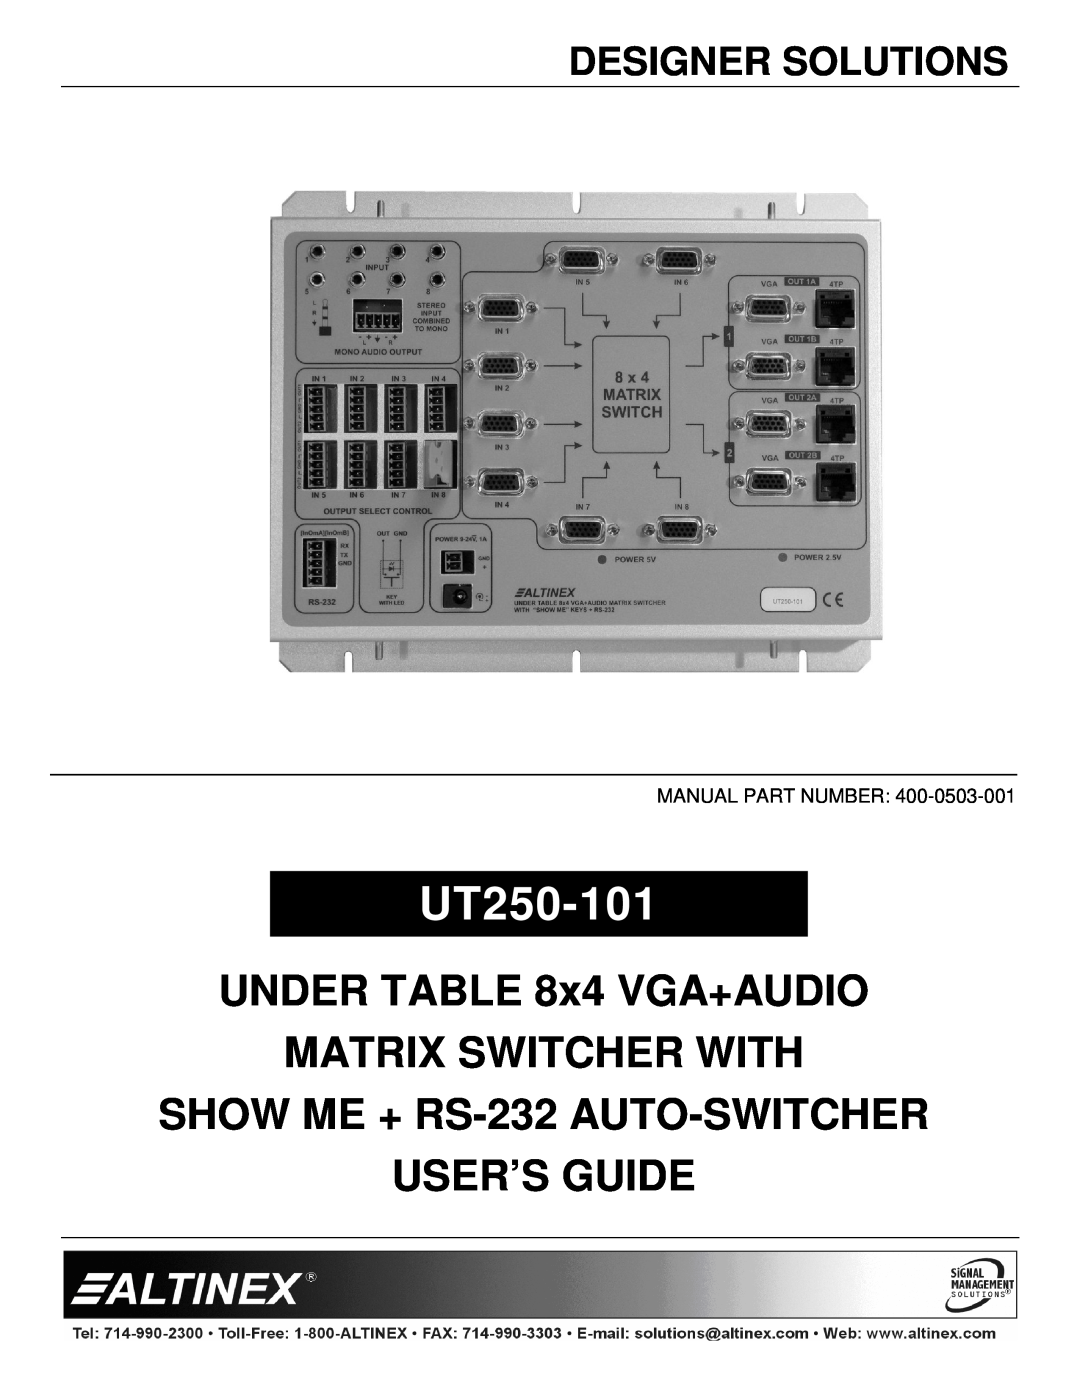 Altinex UT250-101 manual Designer Solutions, UNDER x4 VGA+AUDIO MATRIX SWITCHER WITH 